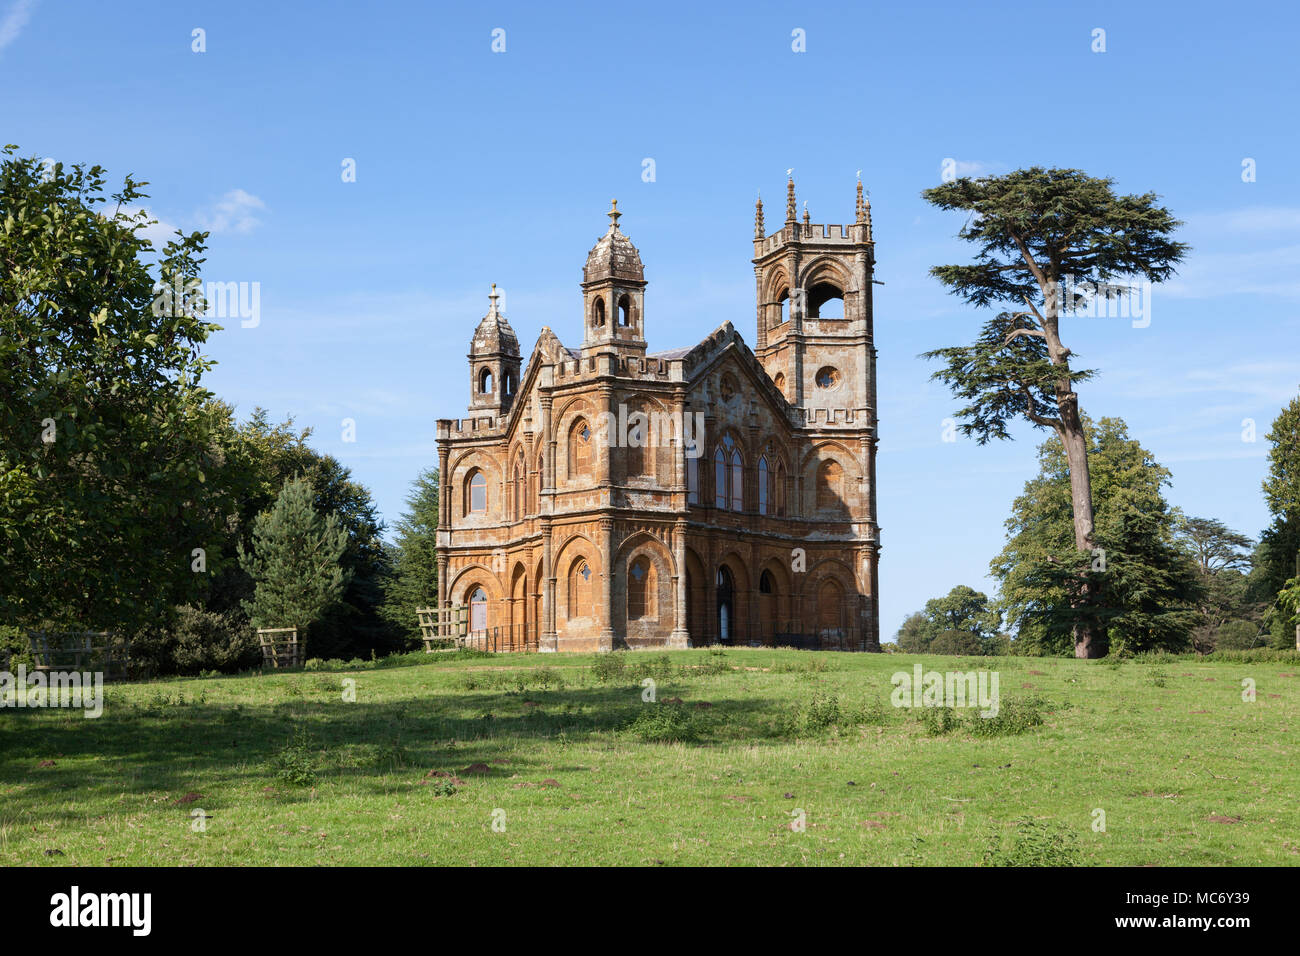 The Gothic Temple, Stowe Landscape Gardens, Stowe House, Buckinghamshire, England, UK Stock Photo